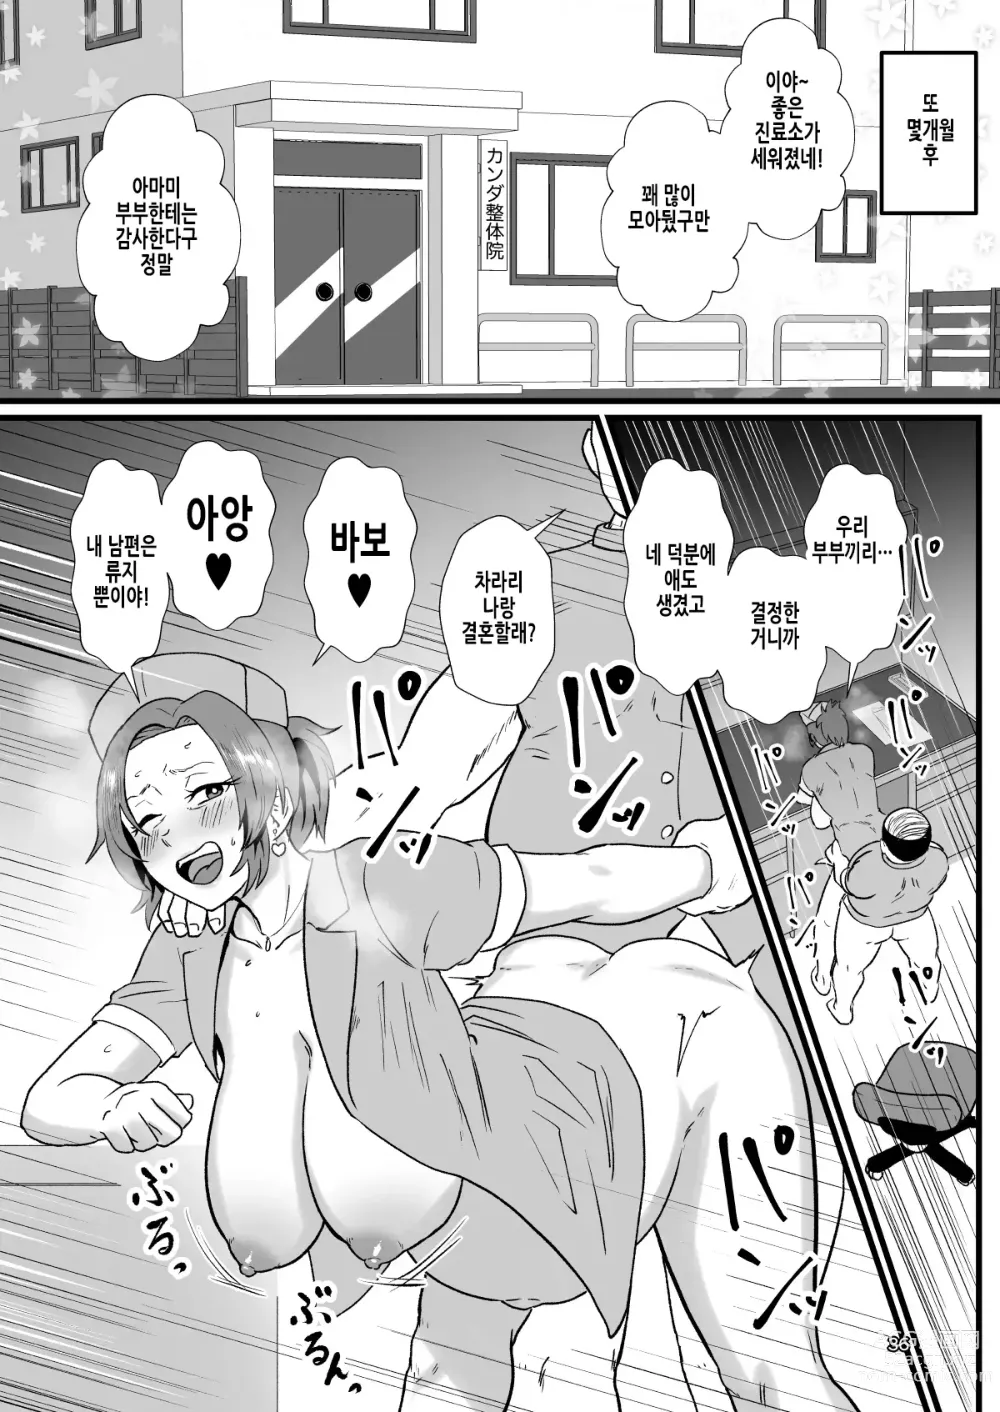 Page 38 of doujinshi 「이런게 바람일리가 없잖아」 ※양키엄마 아마미 히메코는 최면중!